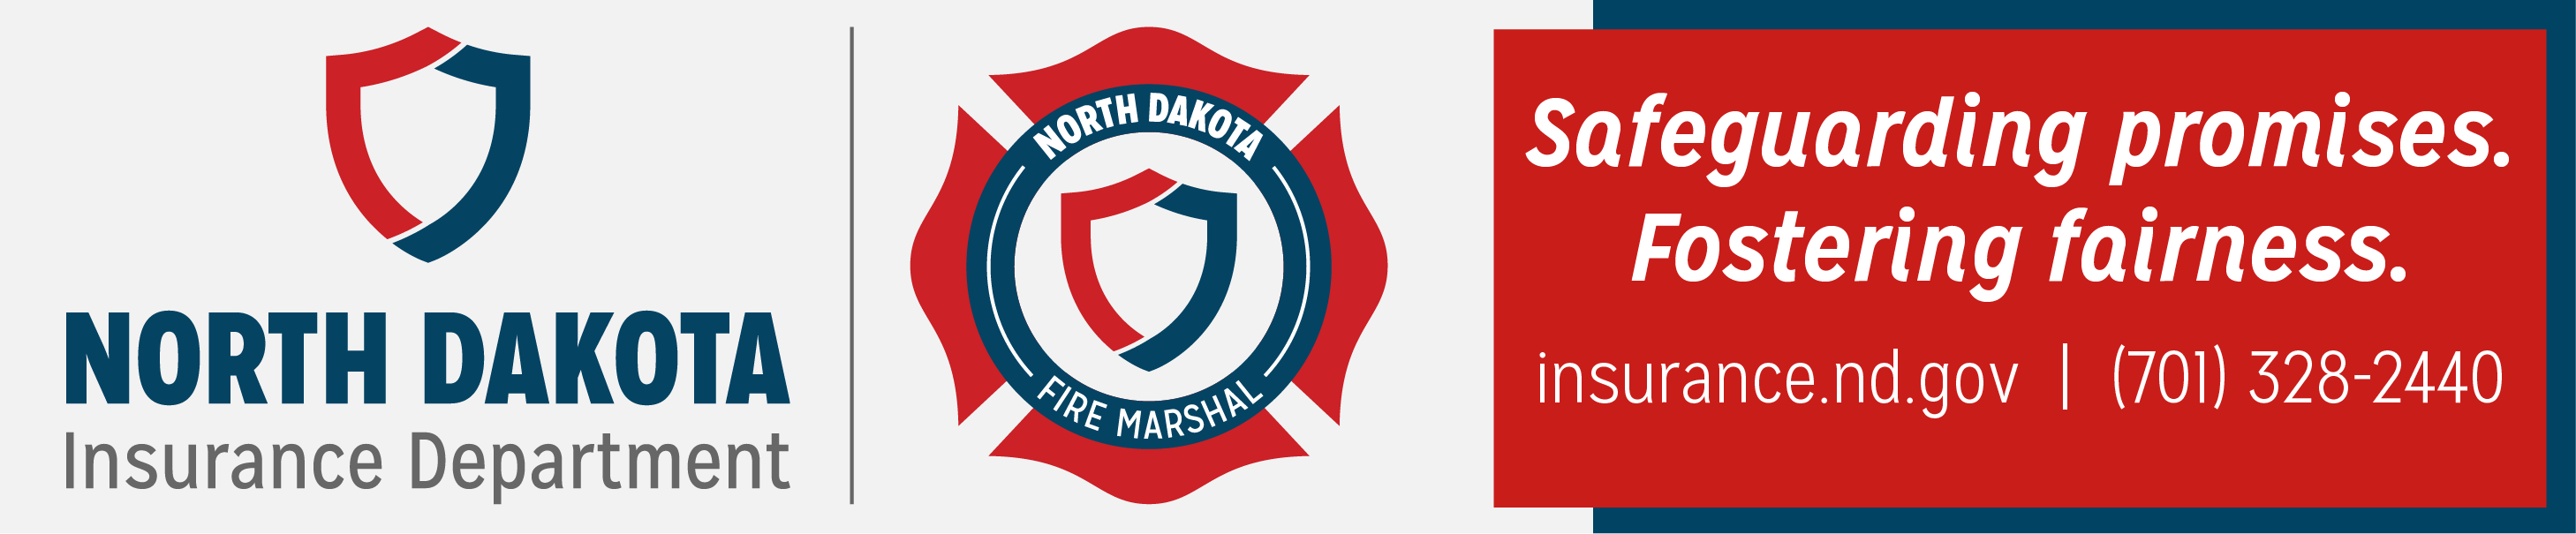 North Dakota Insurance Department & North Dakota Fire Marshal, Safeguarding promises. Fostering Fairness. insurance.nd.gov. (701)328-2440.